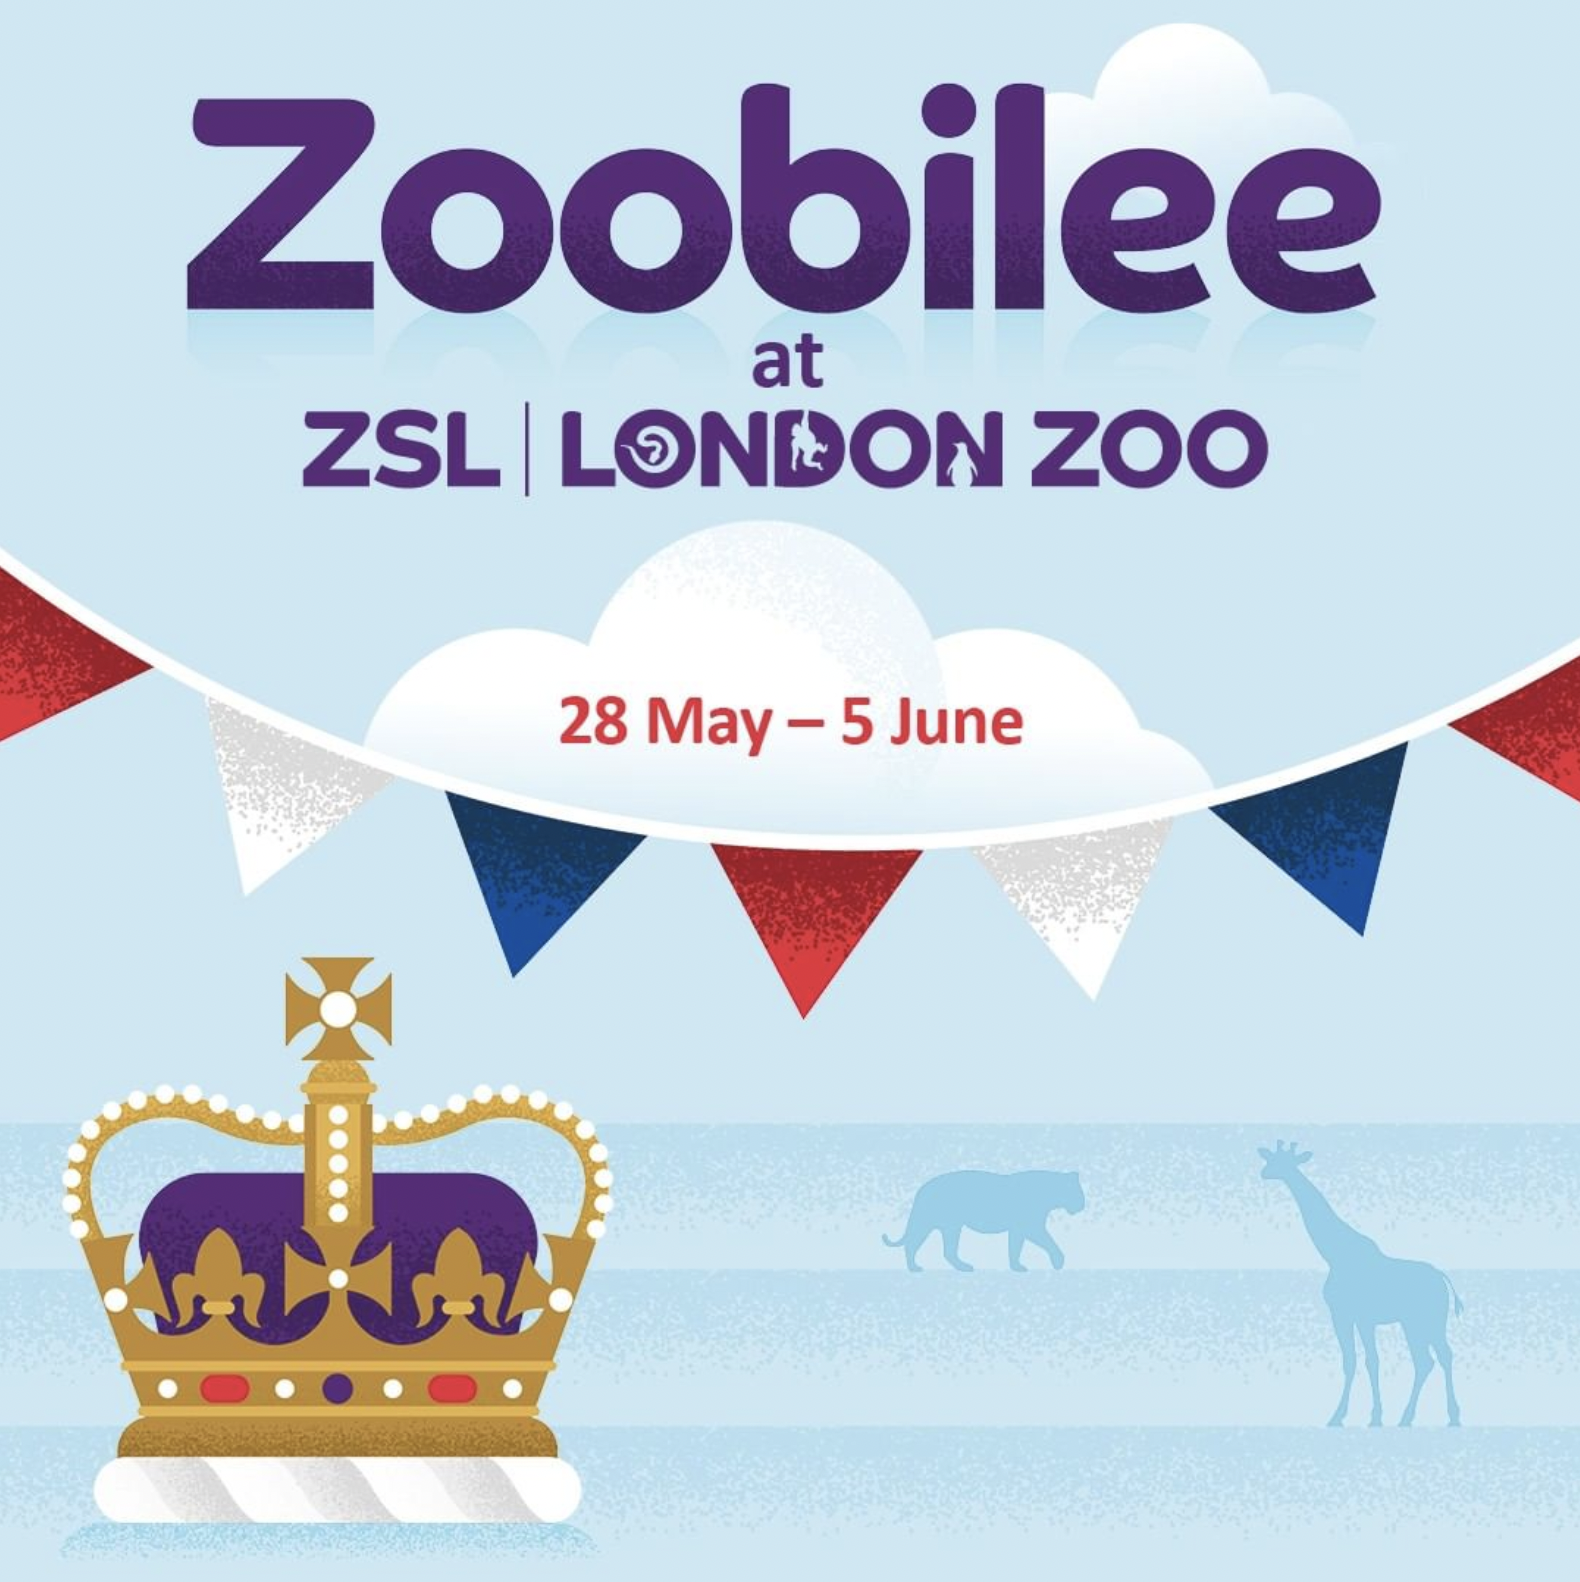 Zoobilee Weekend at London Zoo